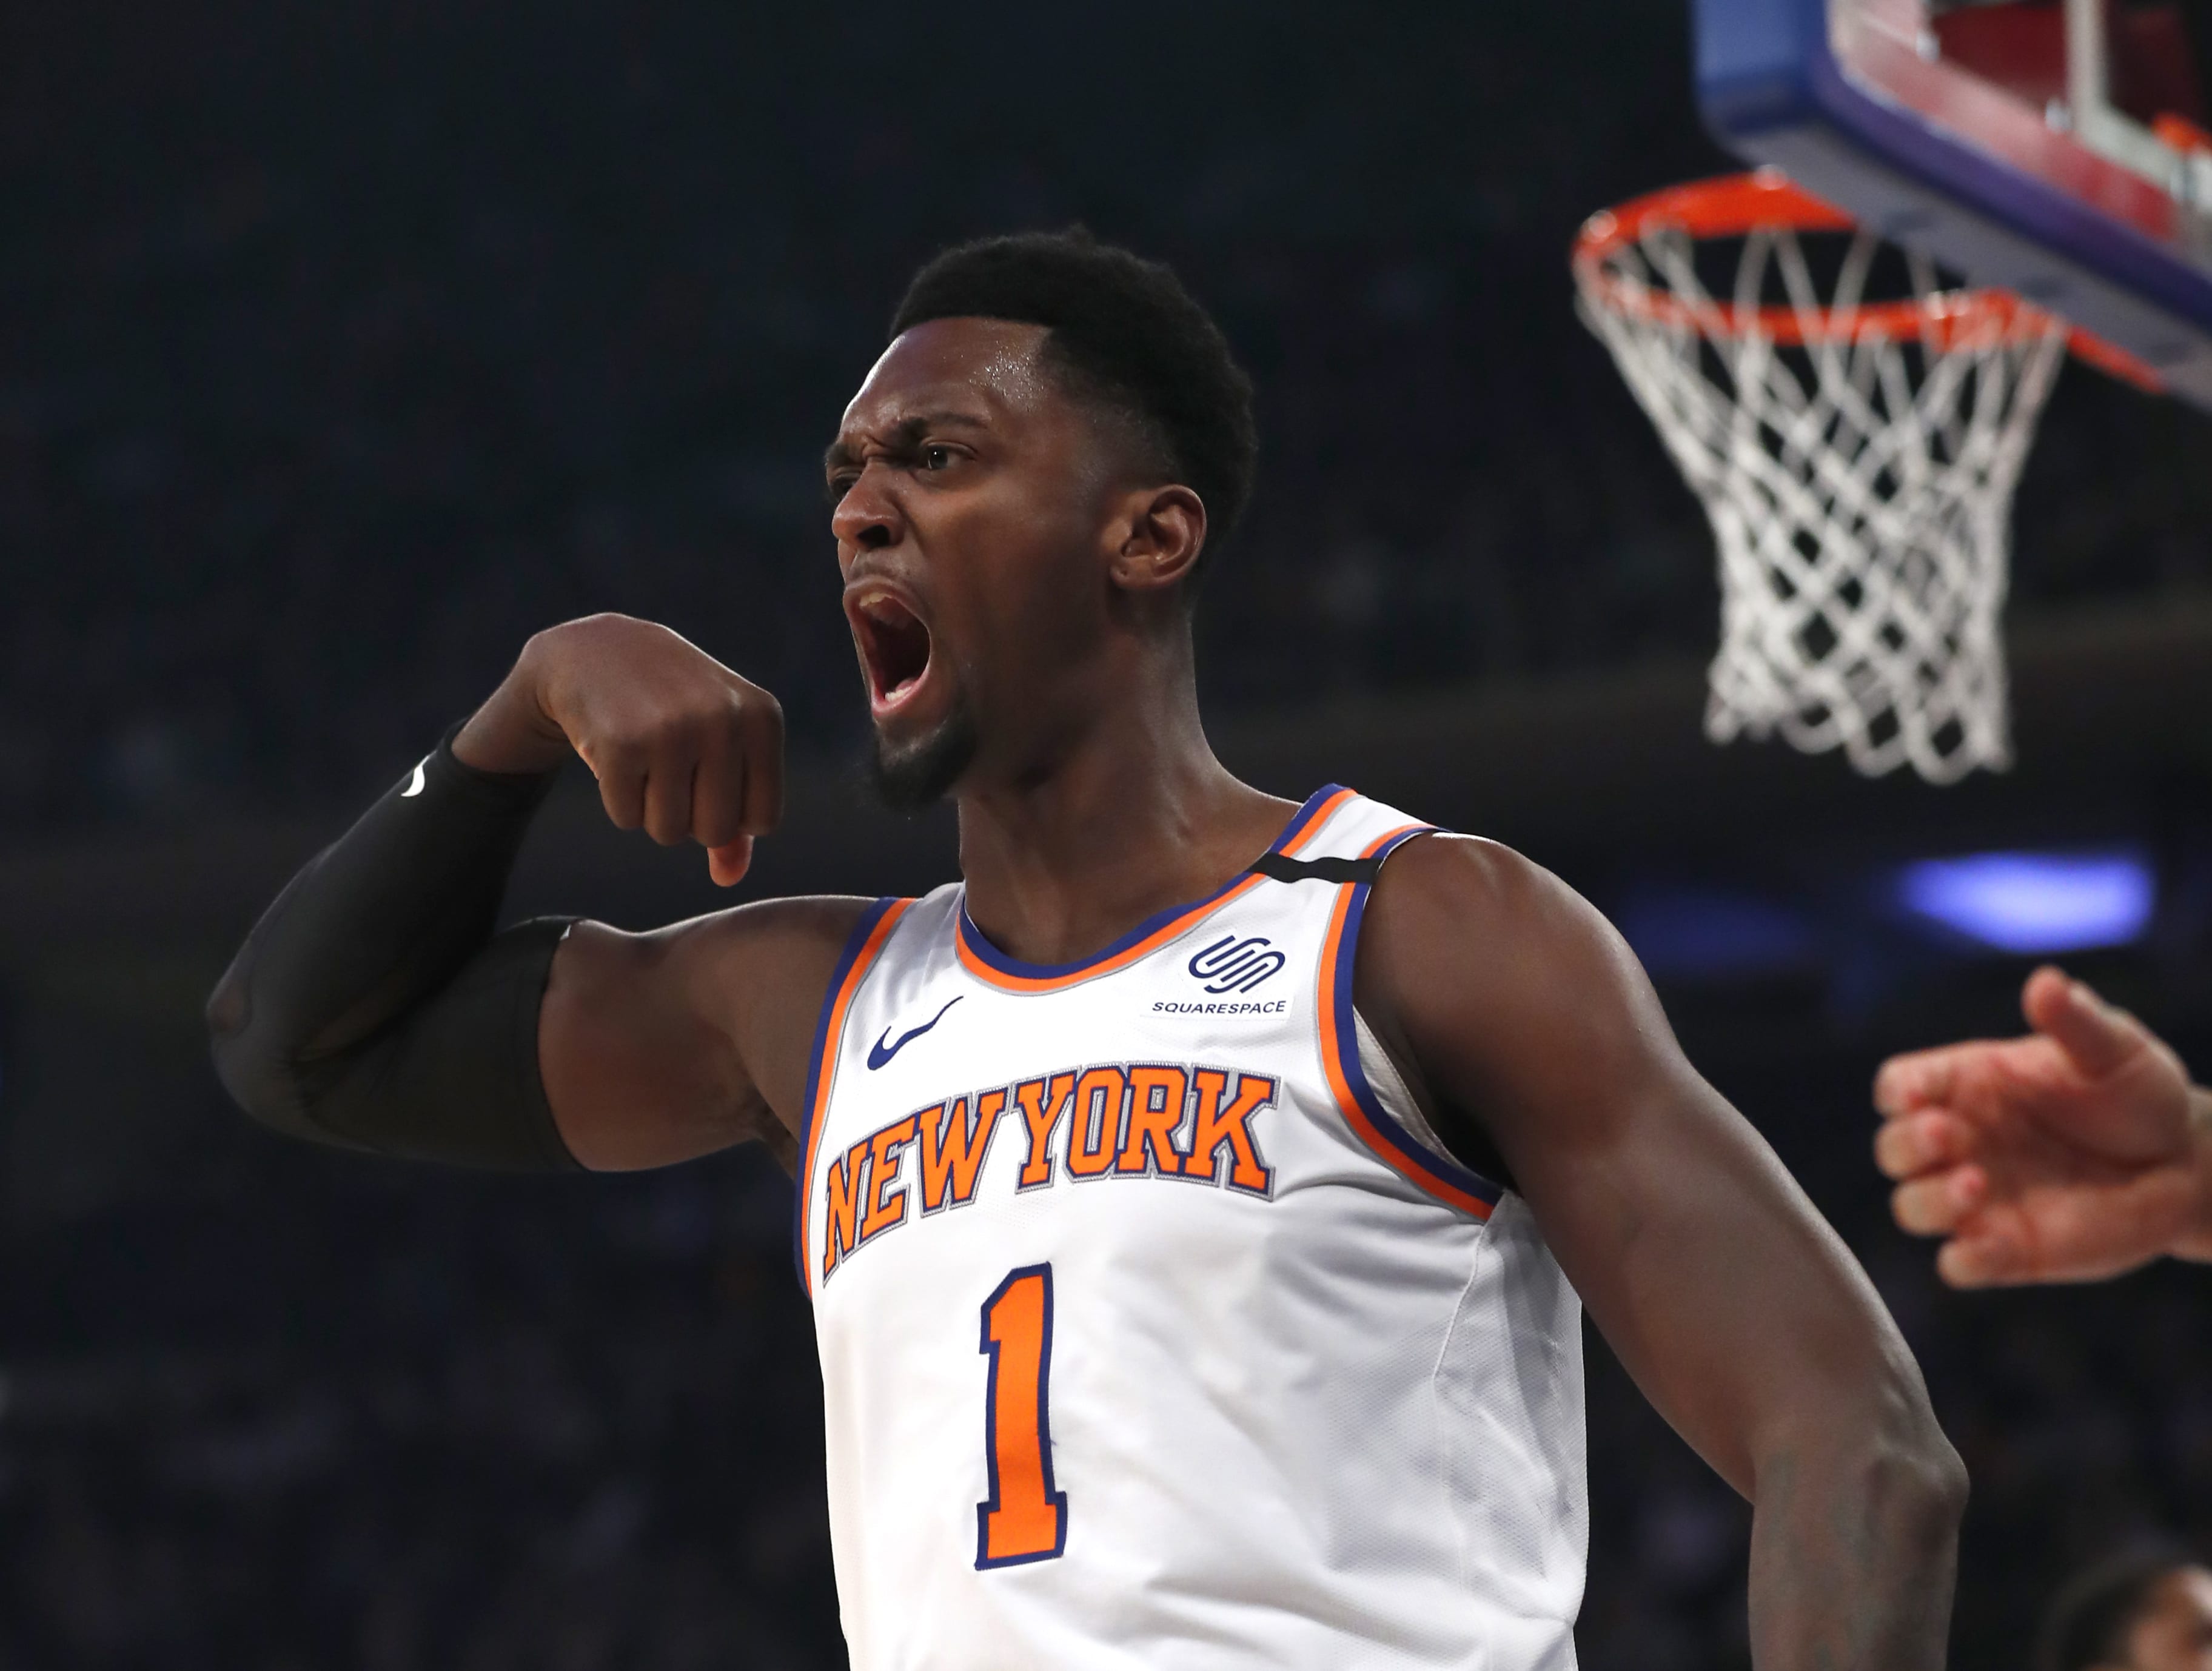 New York Knicks forward Bobby Portis on the Utah Jazz's radar